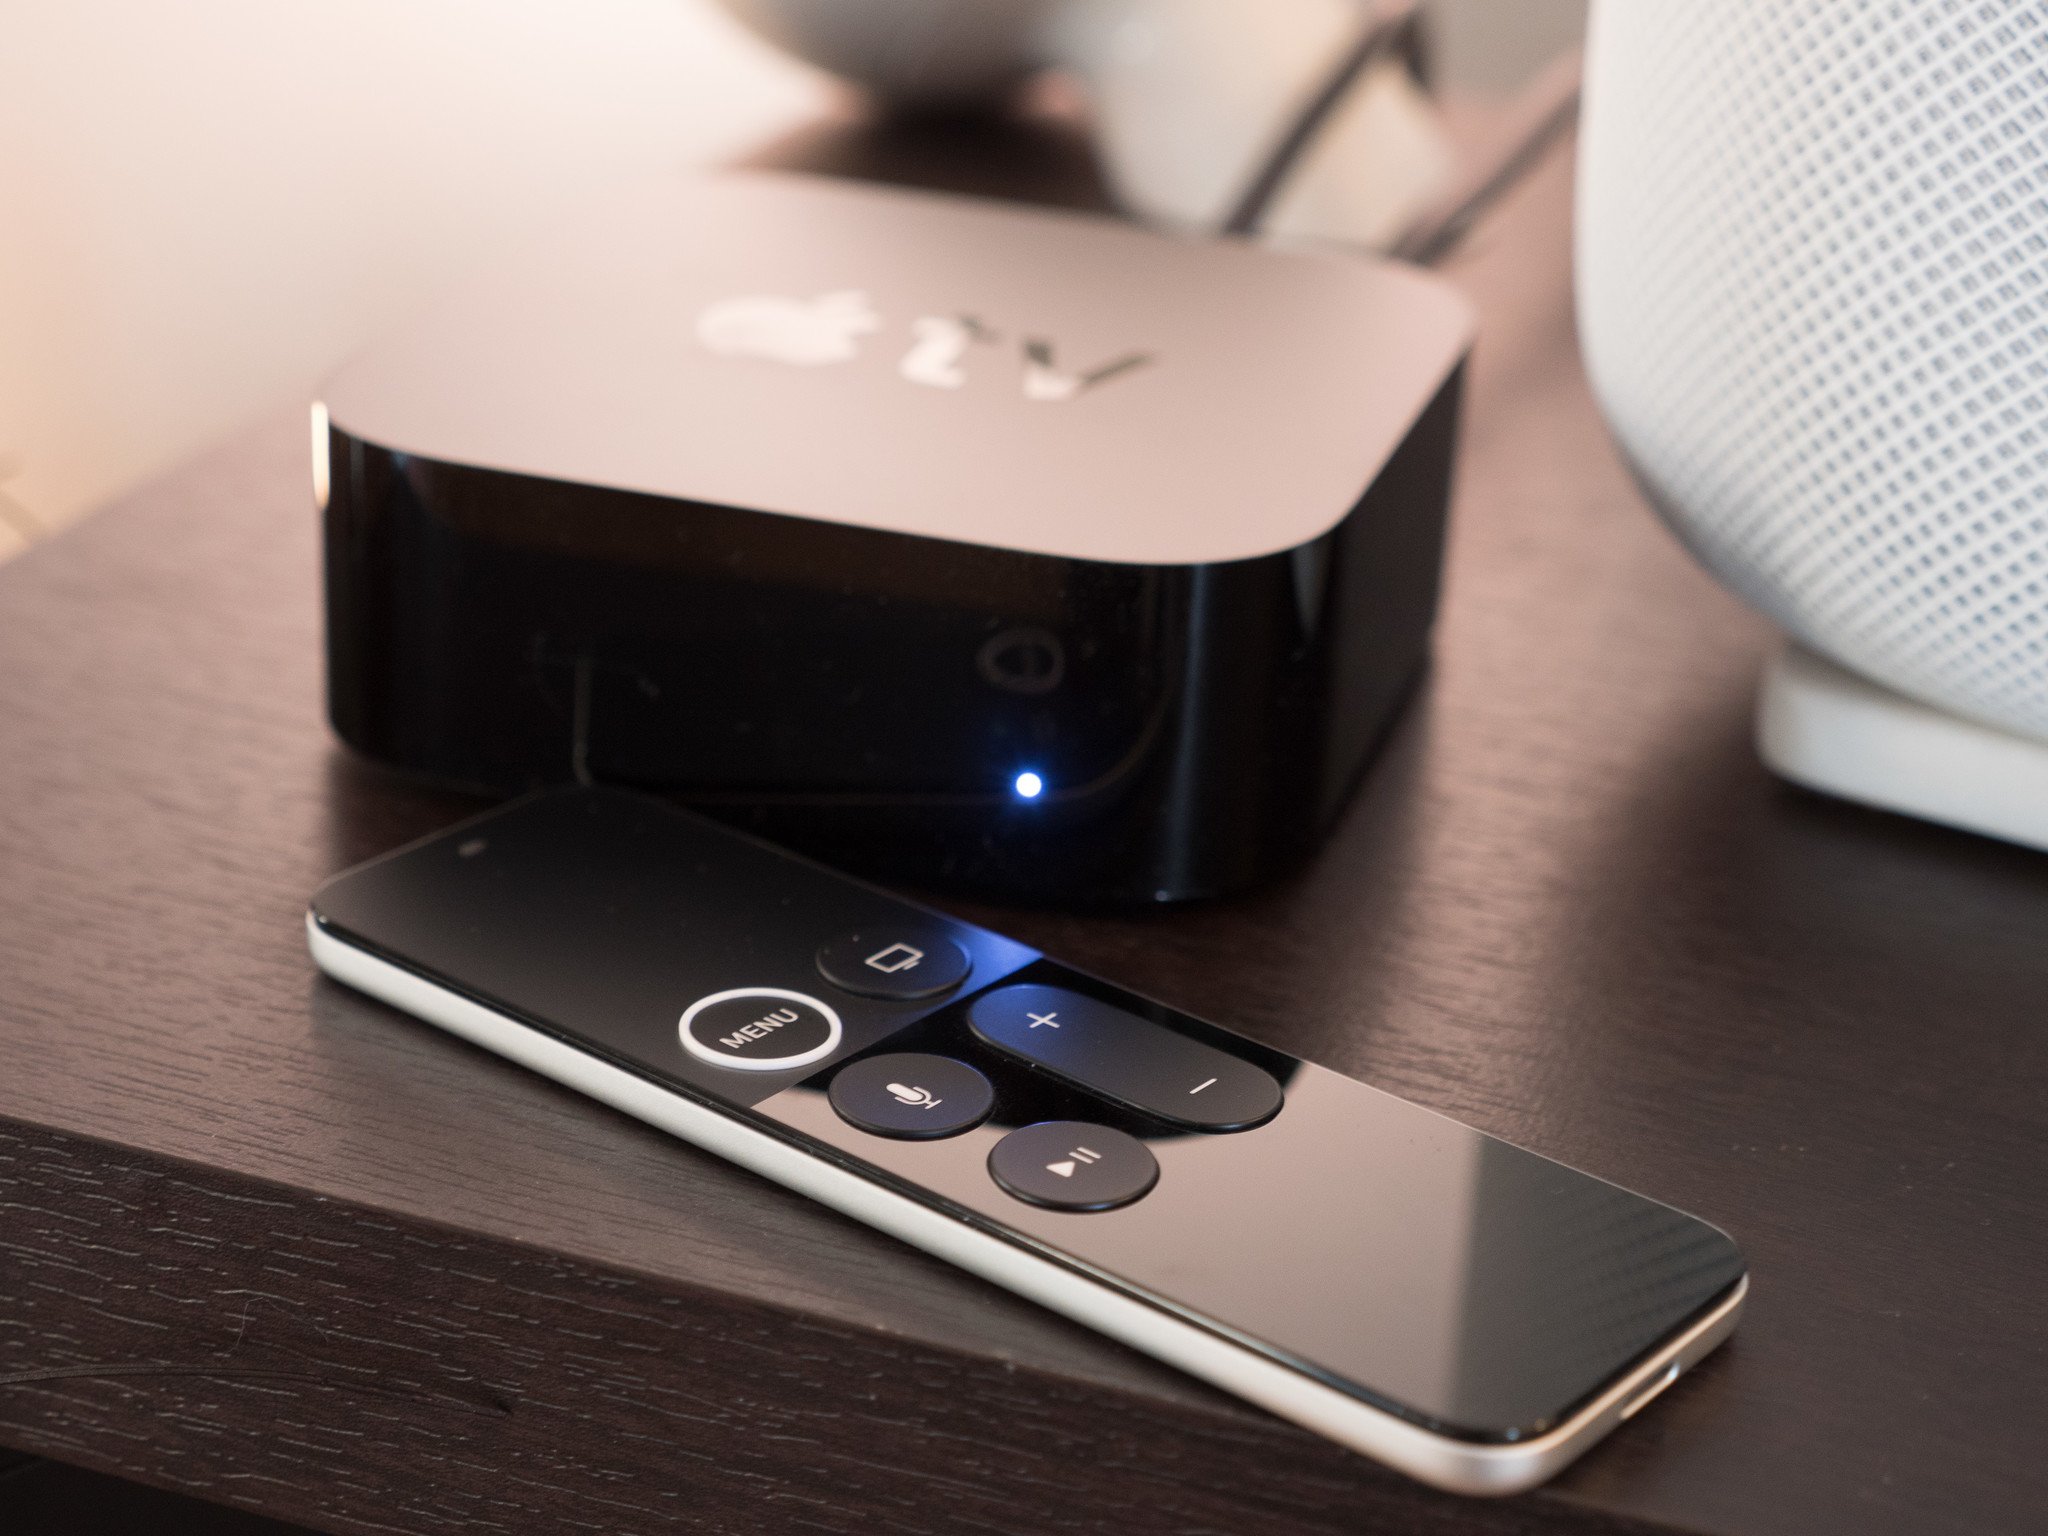 verden manifestation gøre ondt Does Sonos One work with Apple TV? | iMore